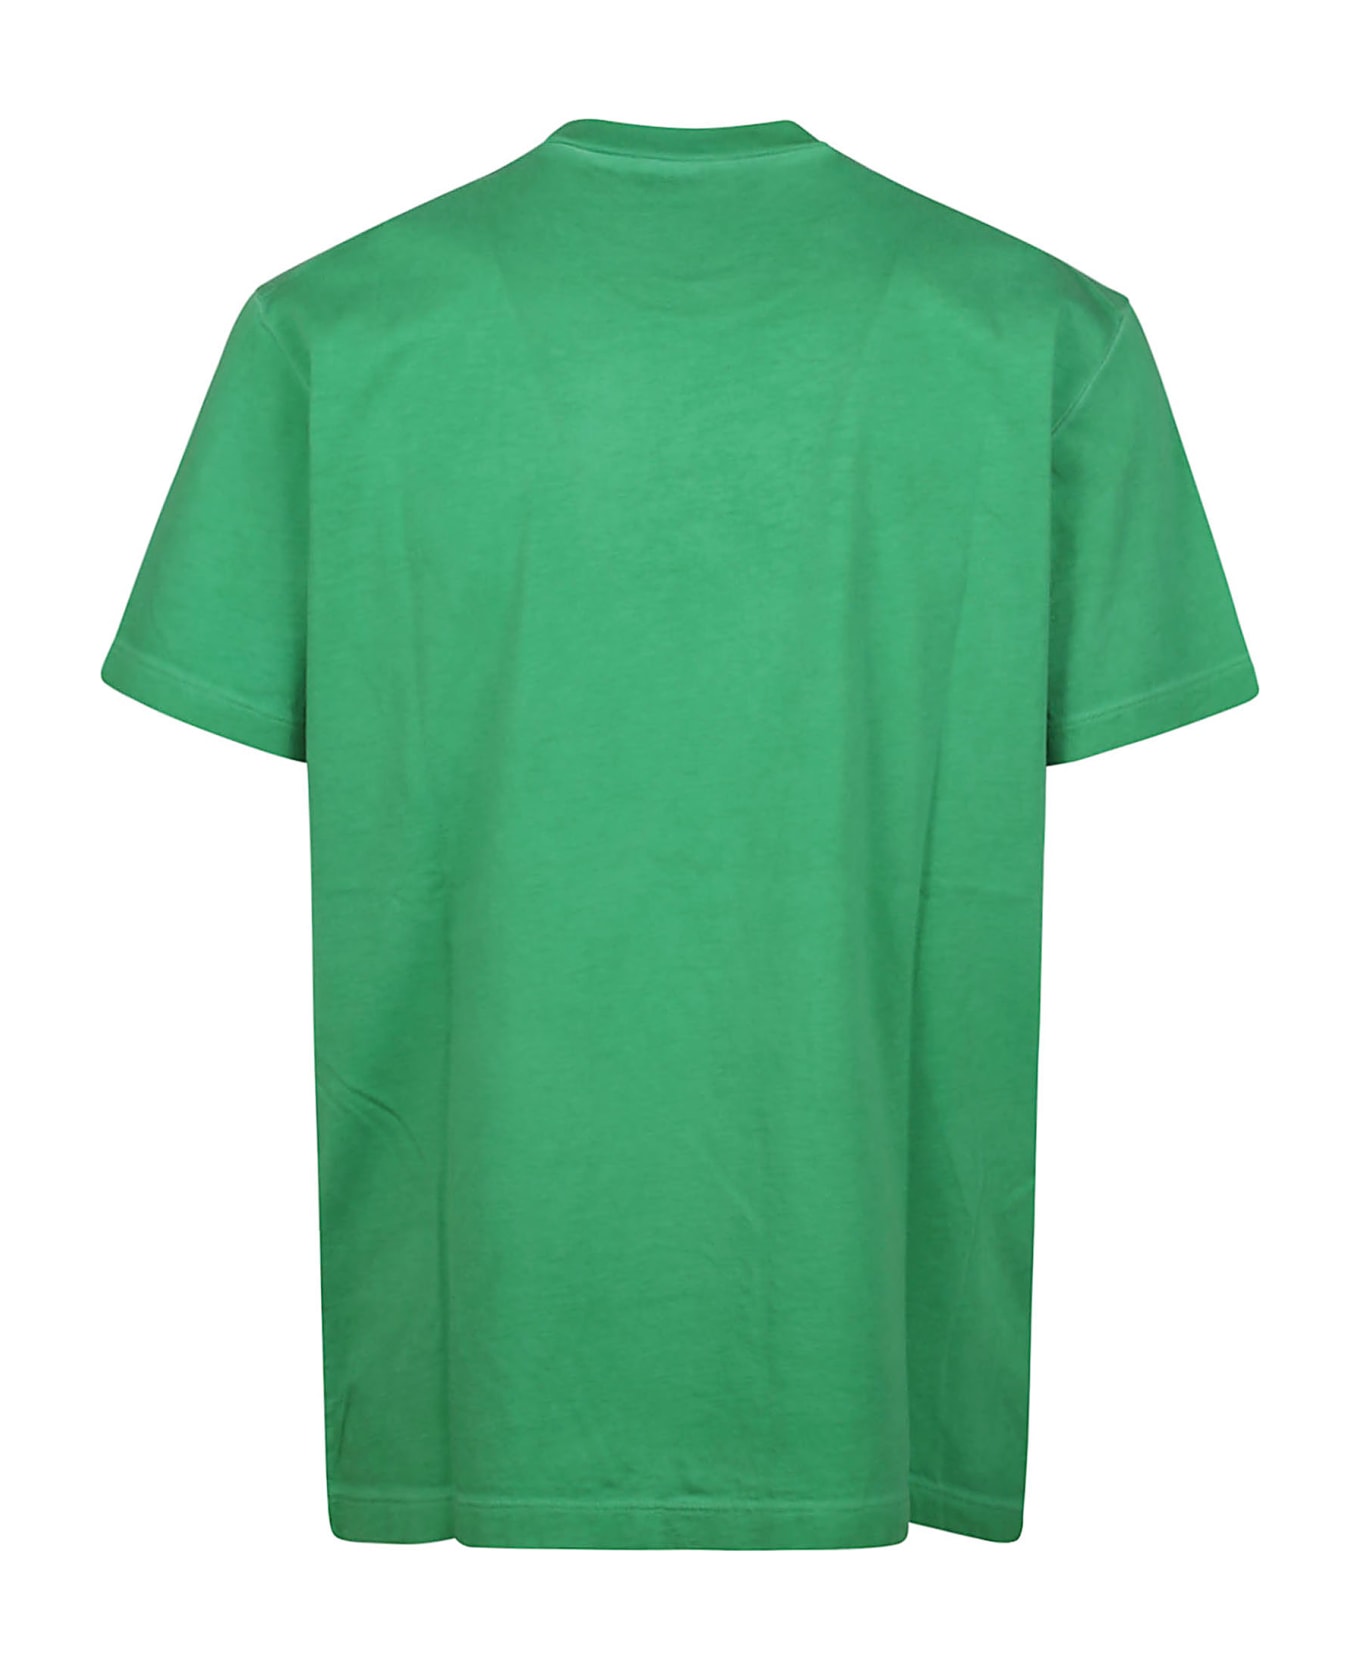 Dsquared2 Cool Fit T-shirt - Ultramarine Green シャツ